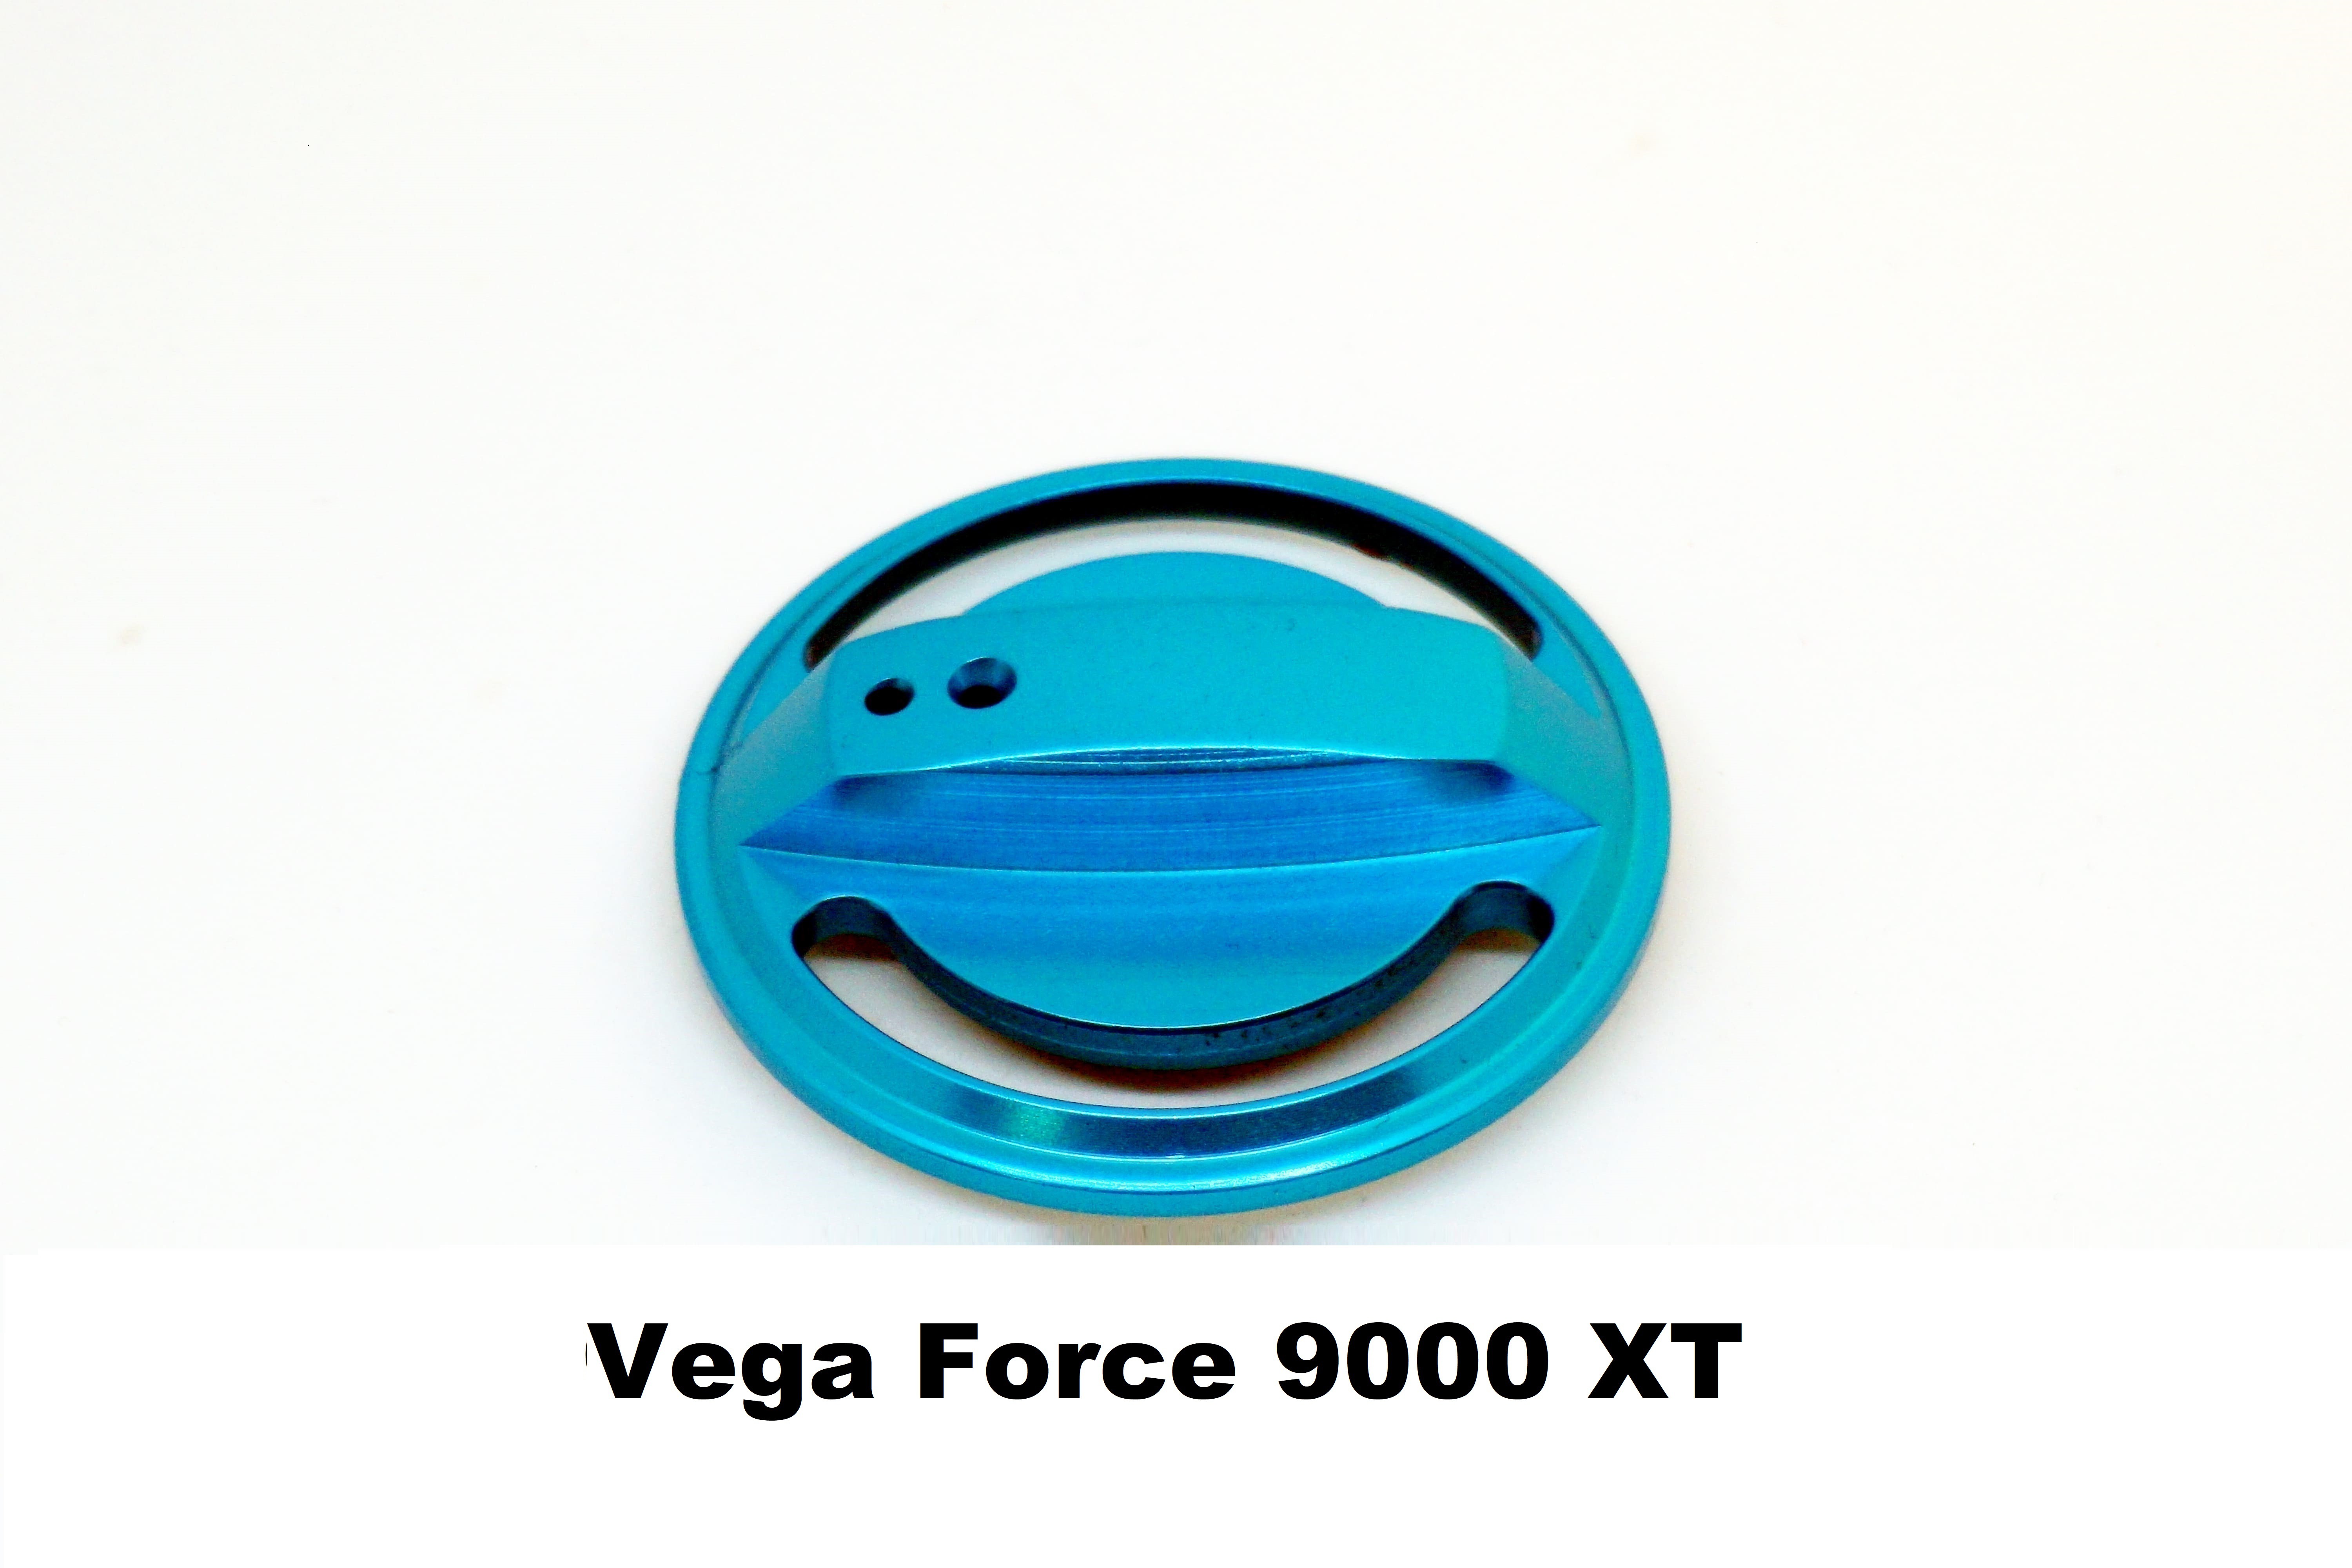 Bremsenknopf für Brandungsrolle Vega Force 9000 XT